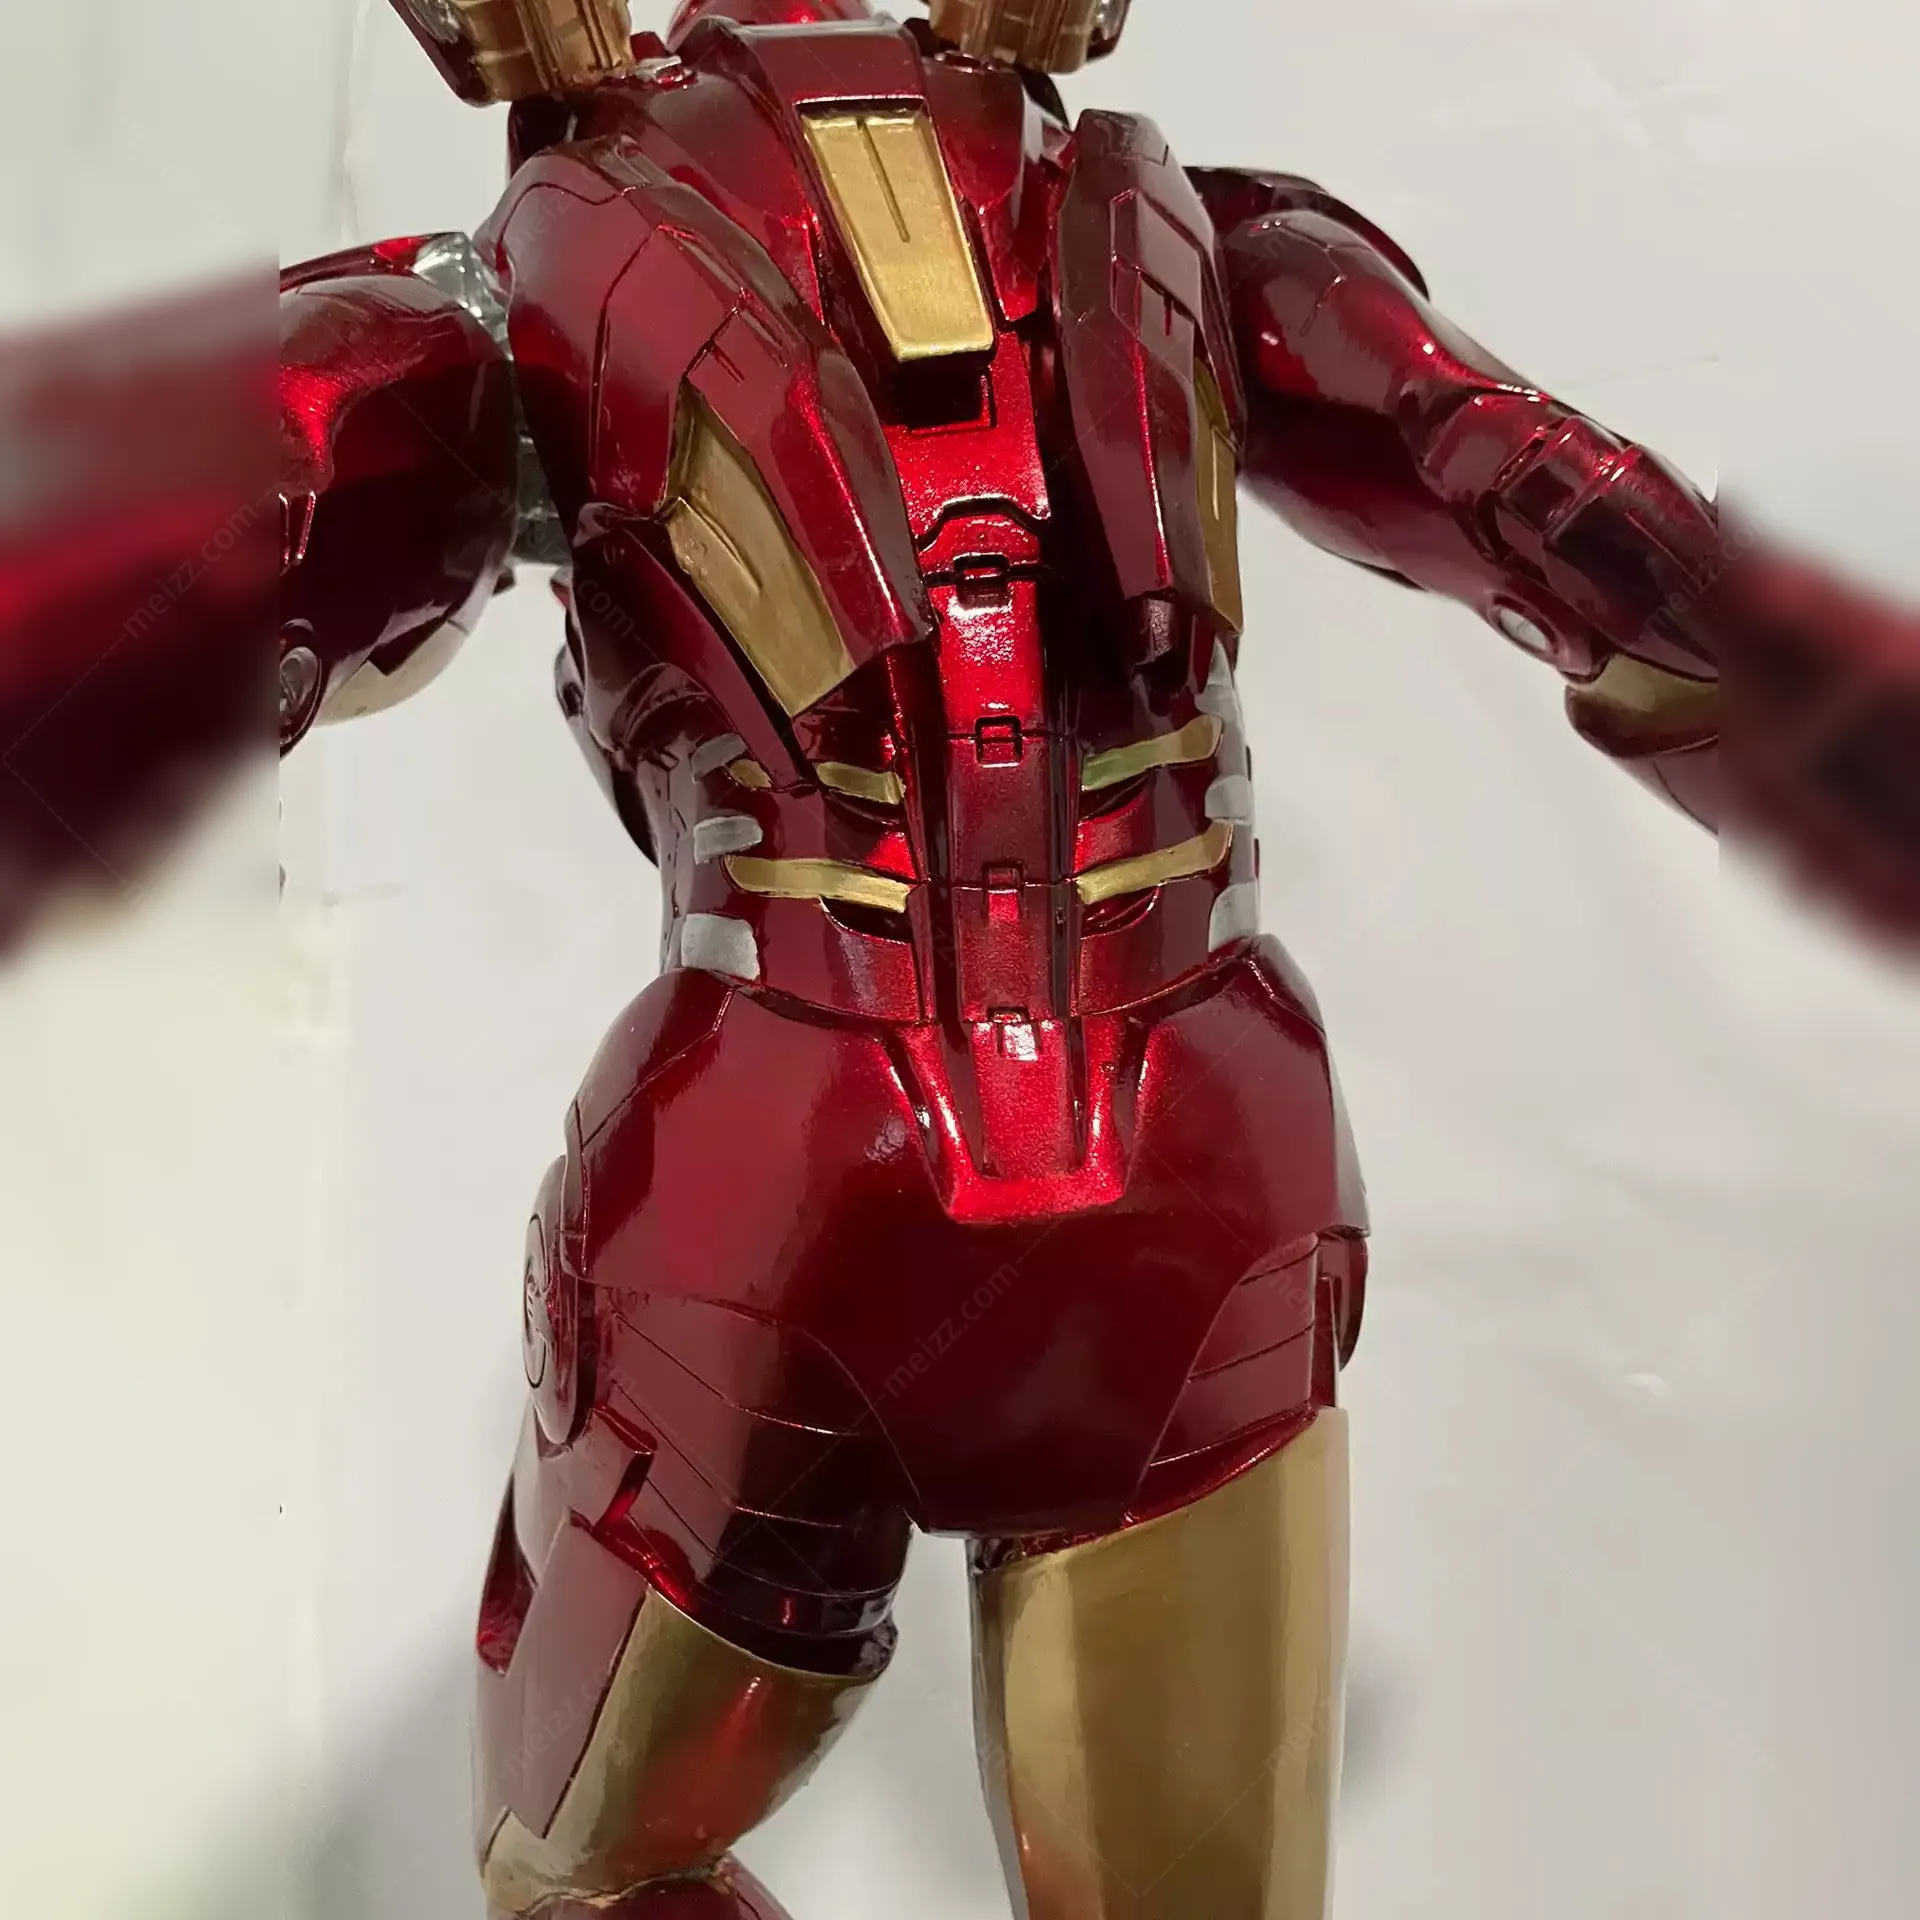 Statue of Iron Man